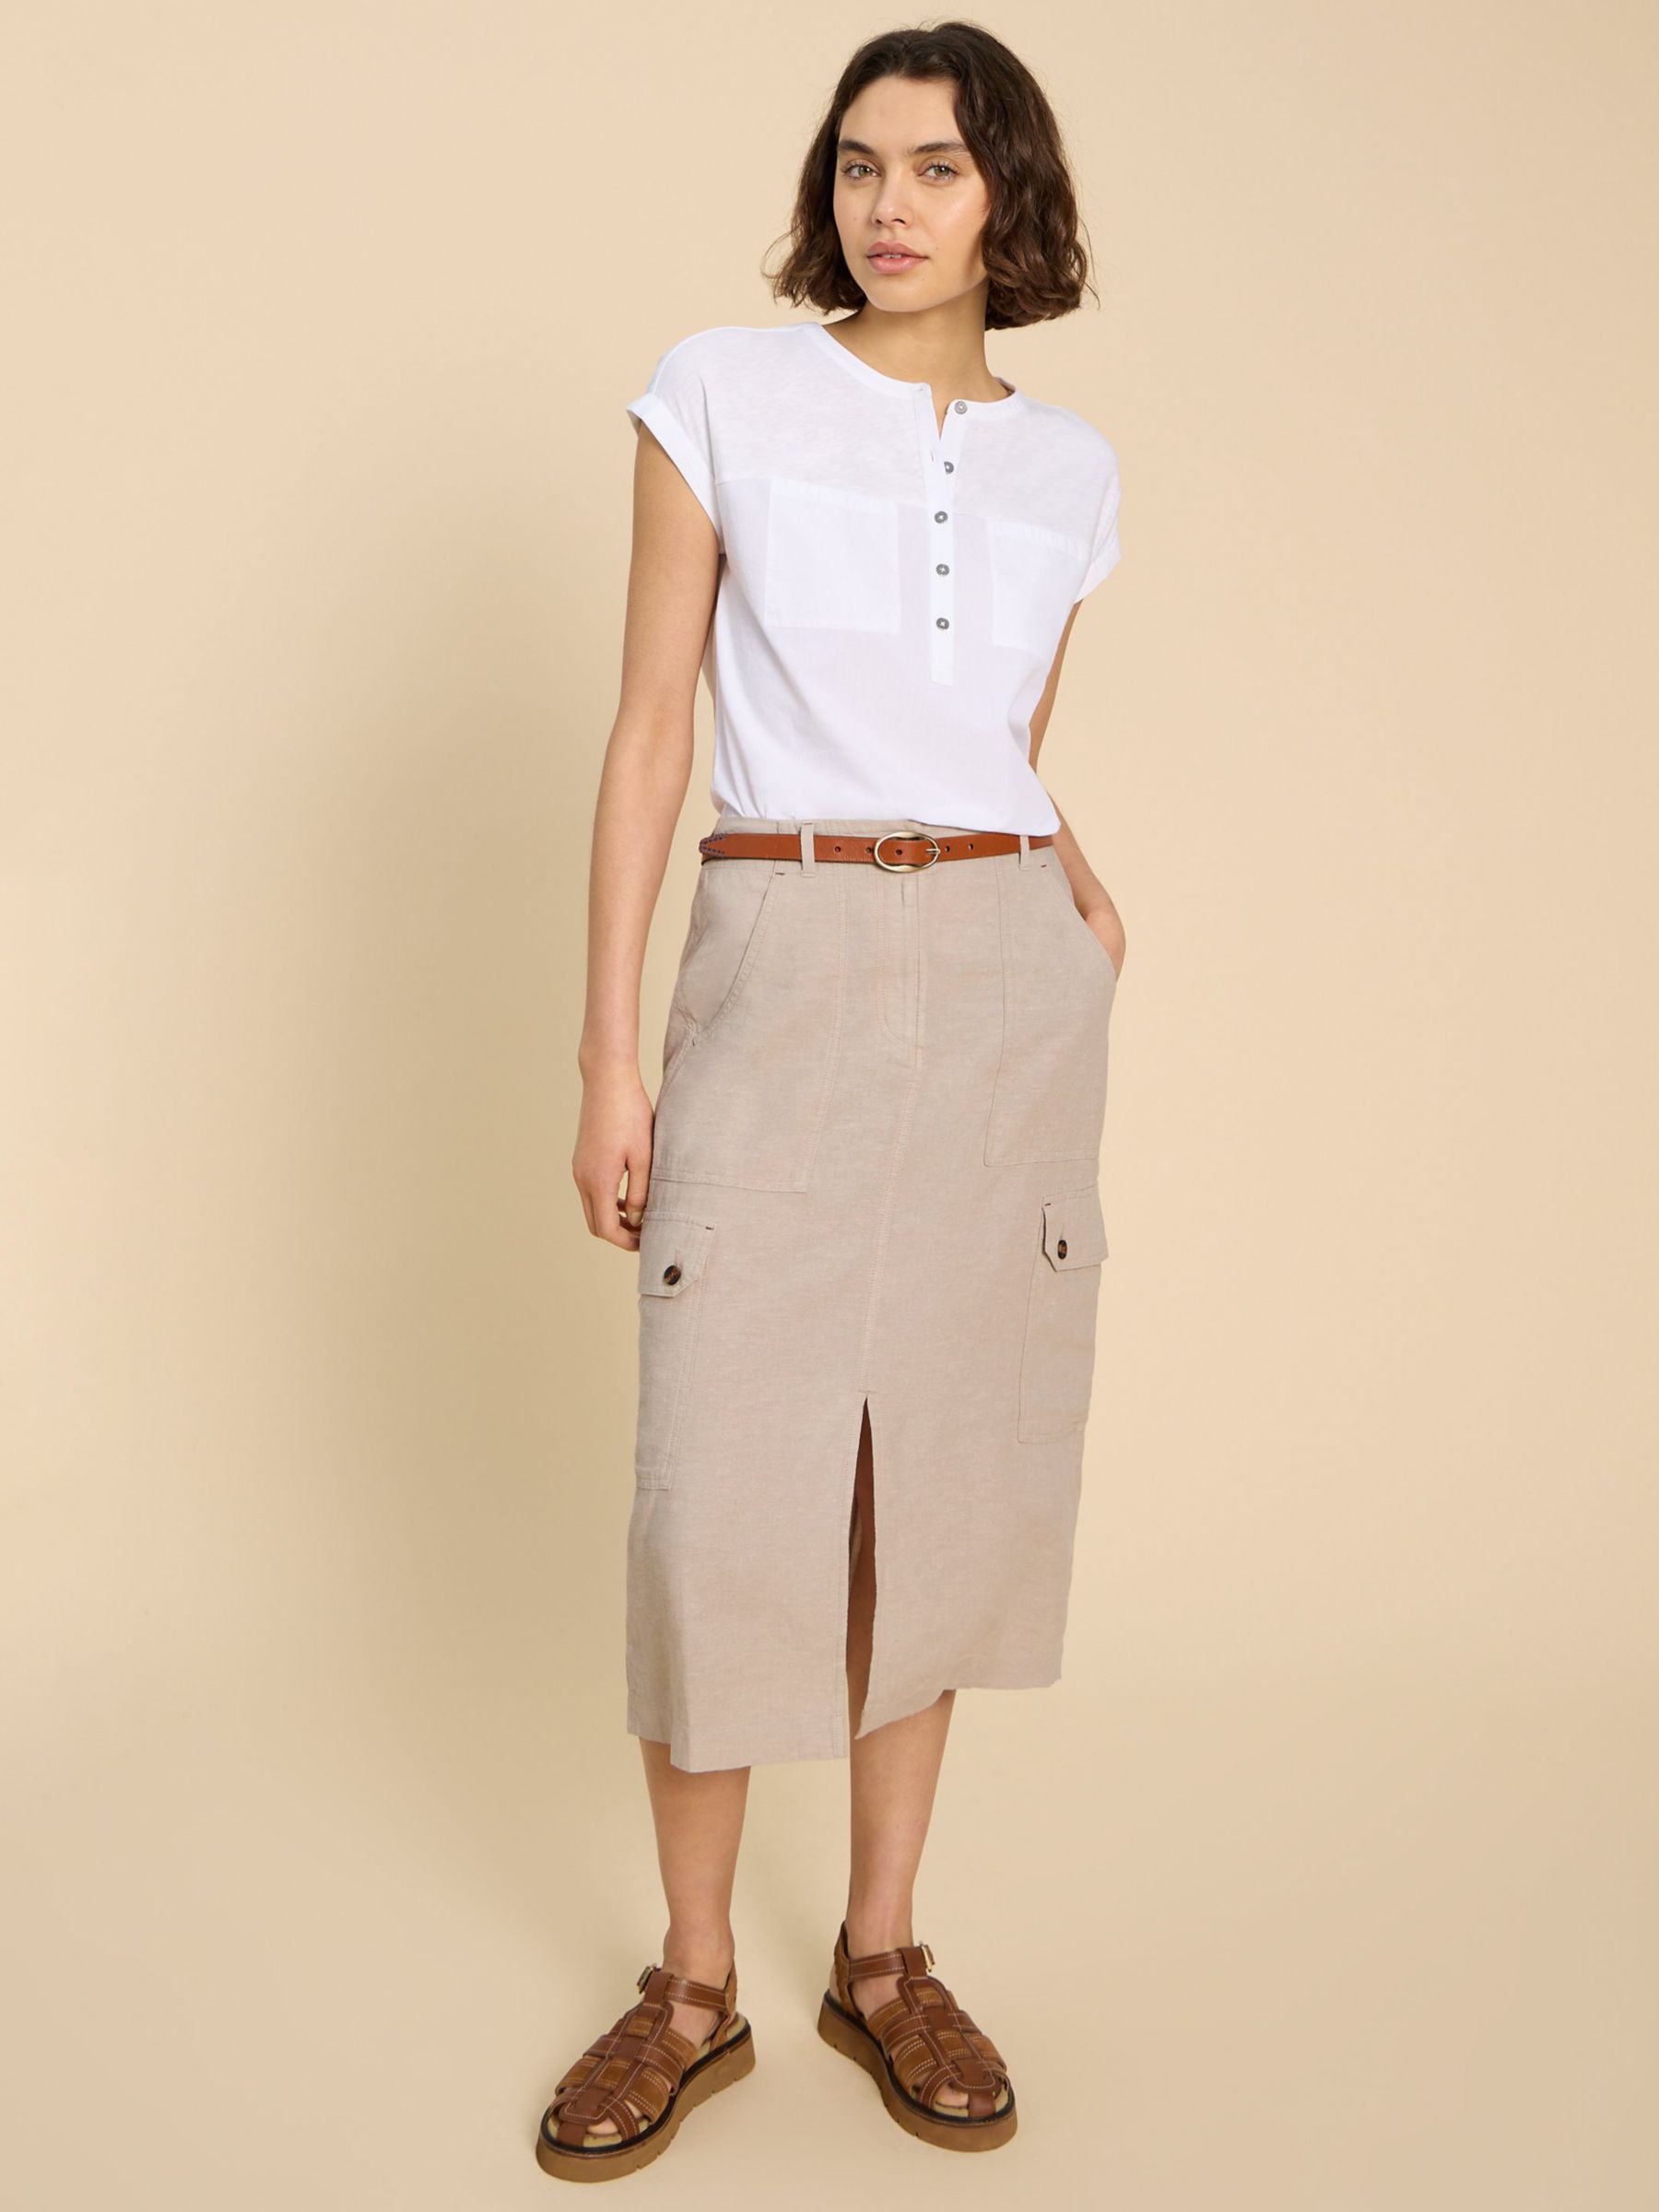 White Stuff Arabella Linen Blend Midi Skirt, Light Natural, 6